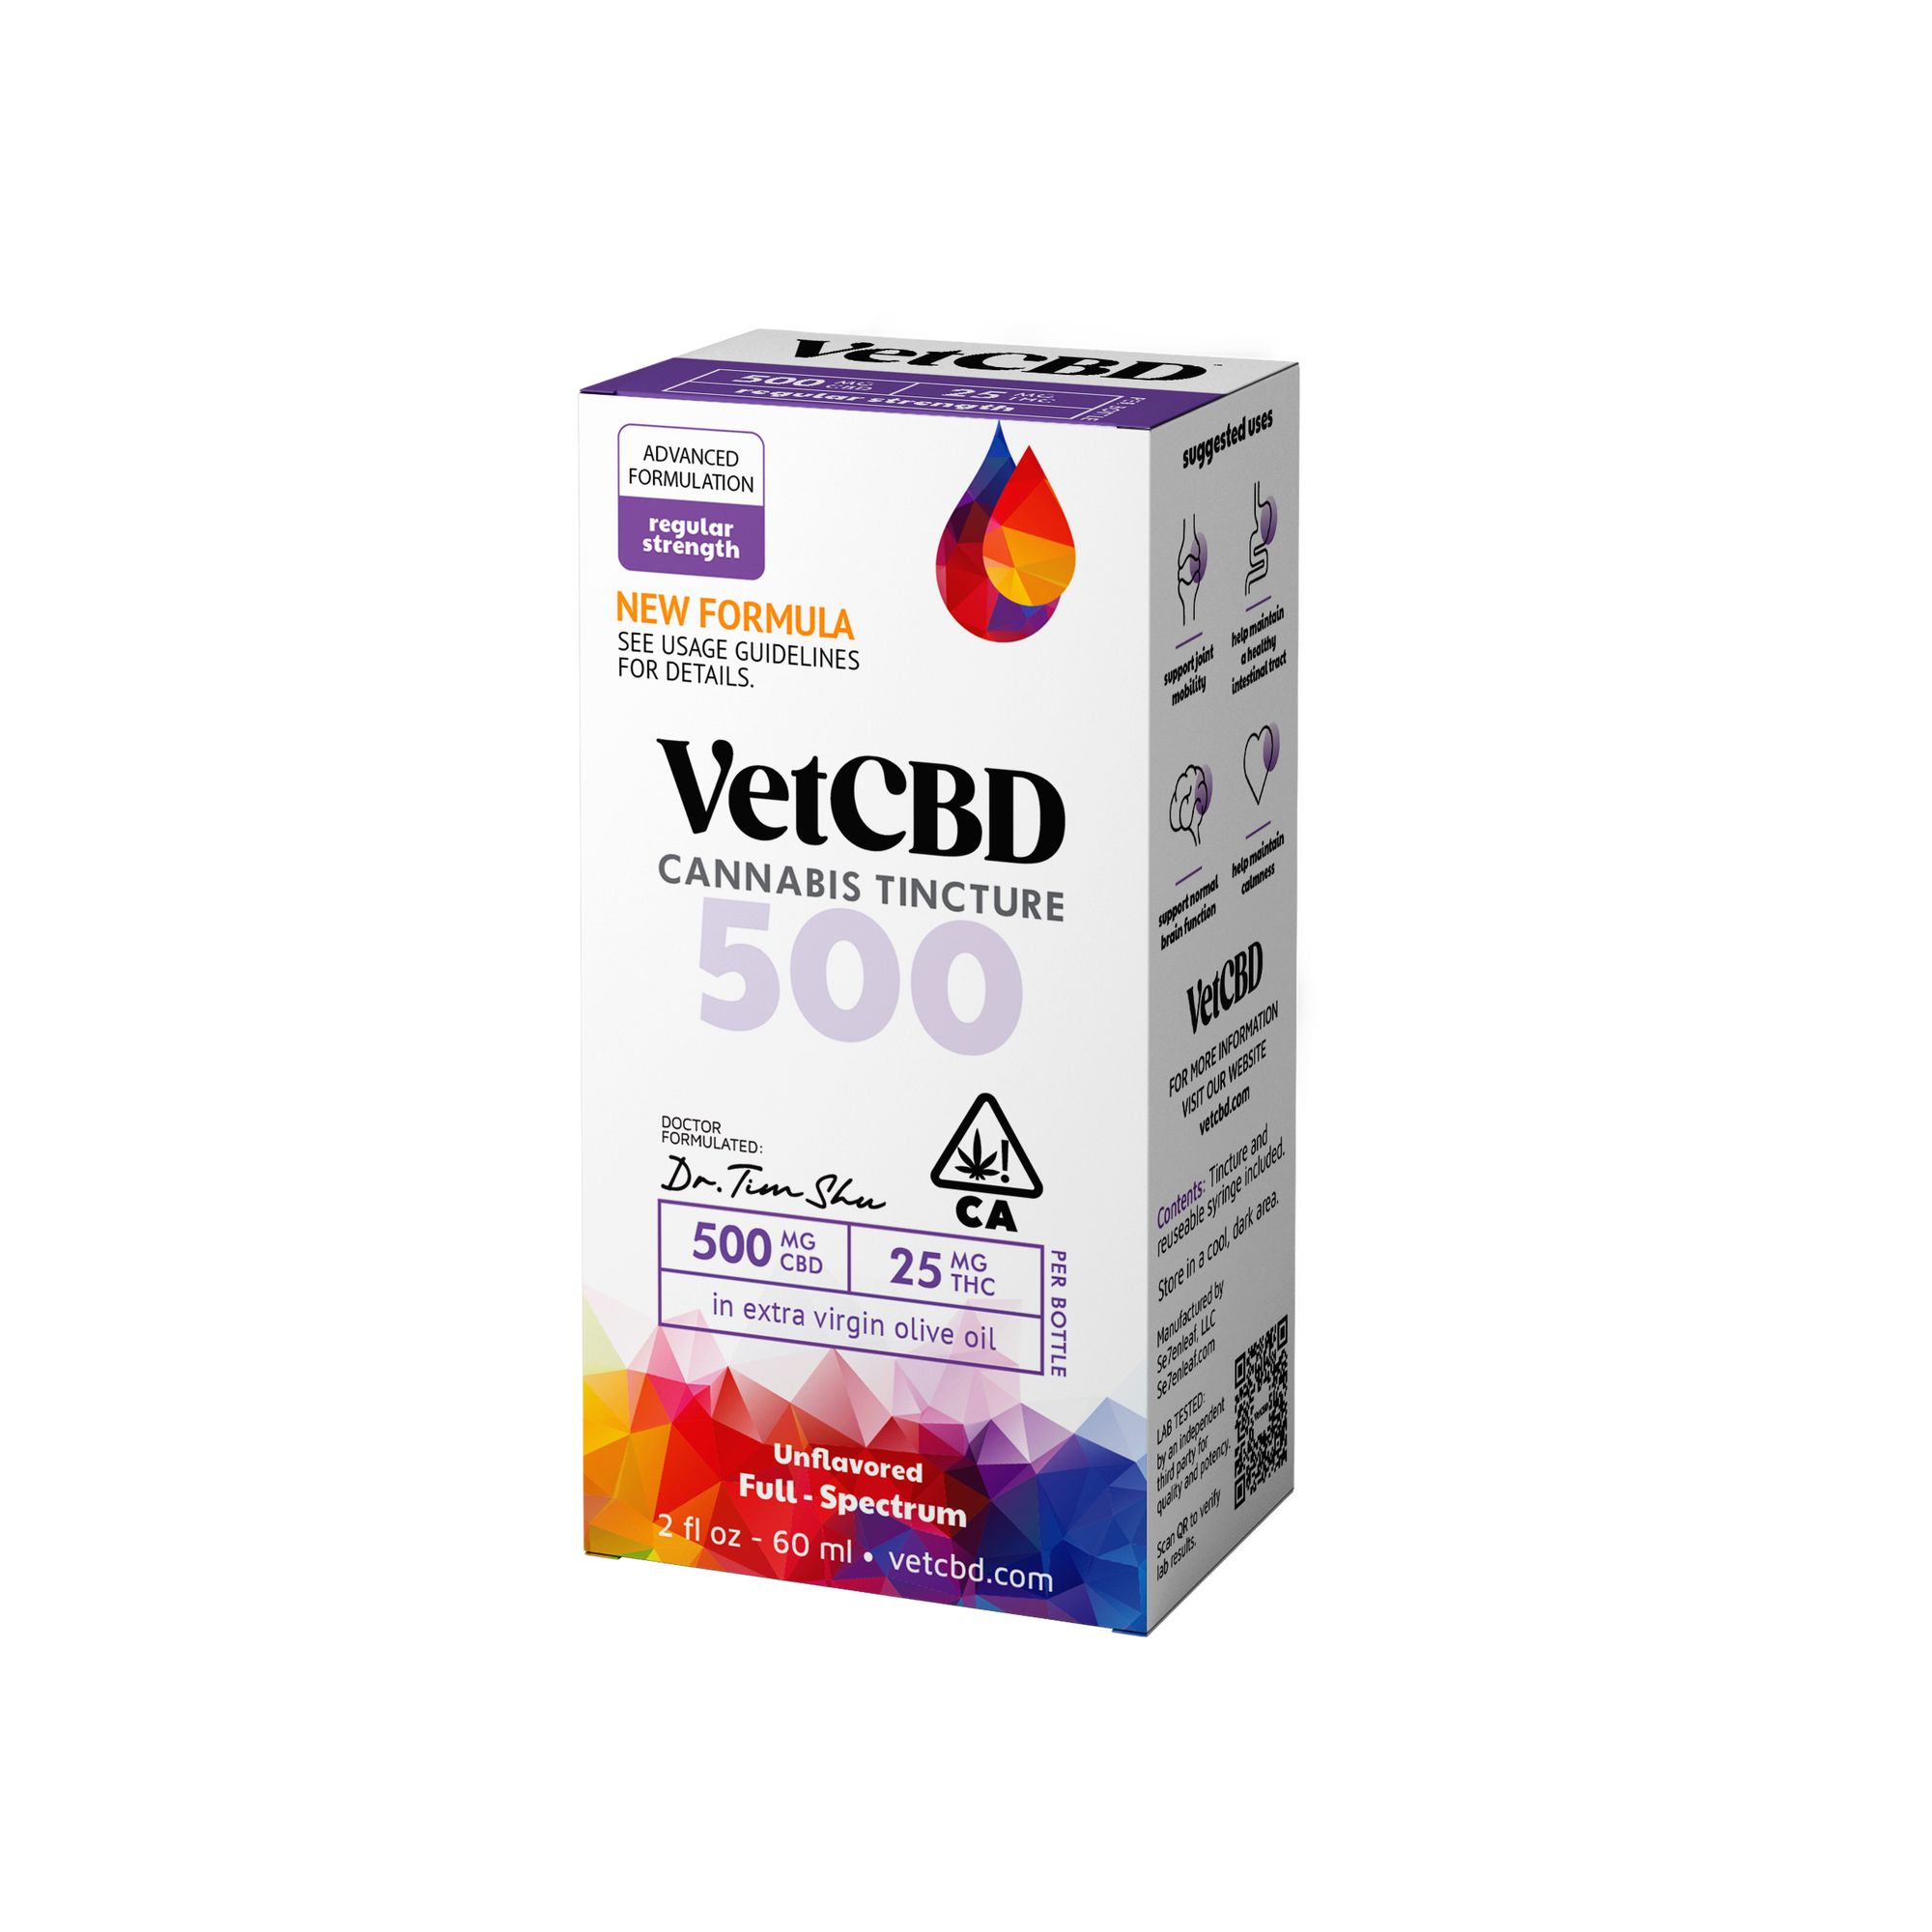 VetCBD, Reg Strength Cannabis Tincture, 500mg, 2oz